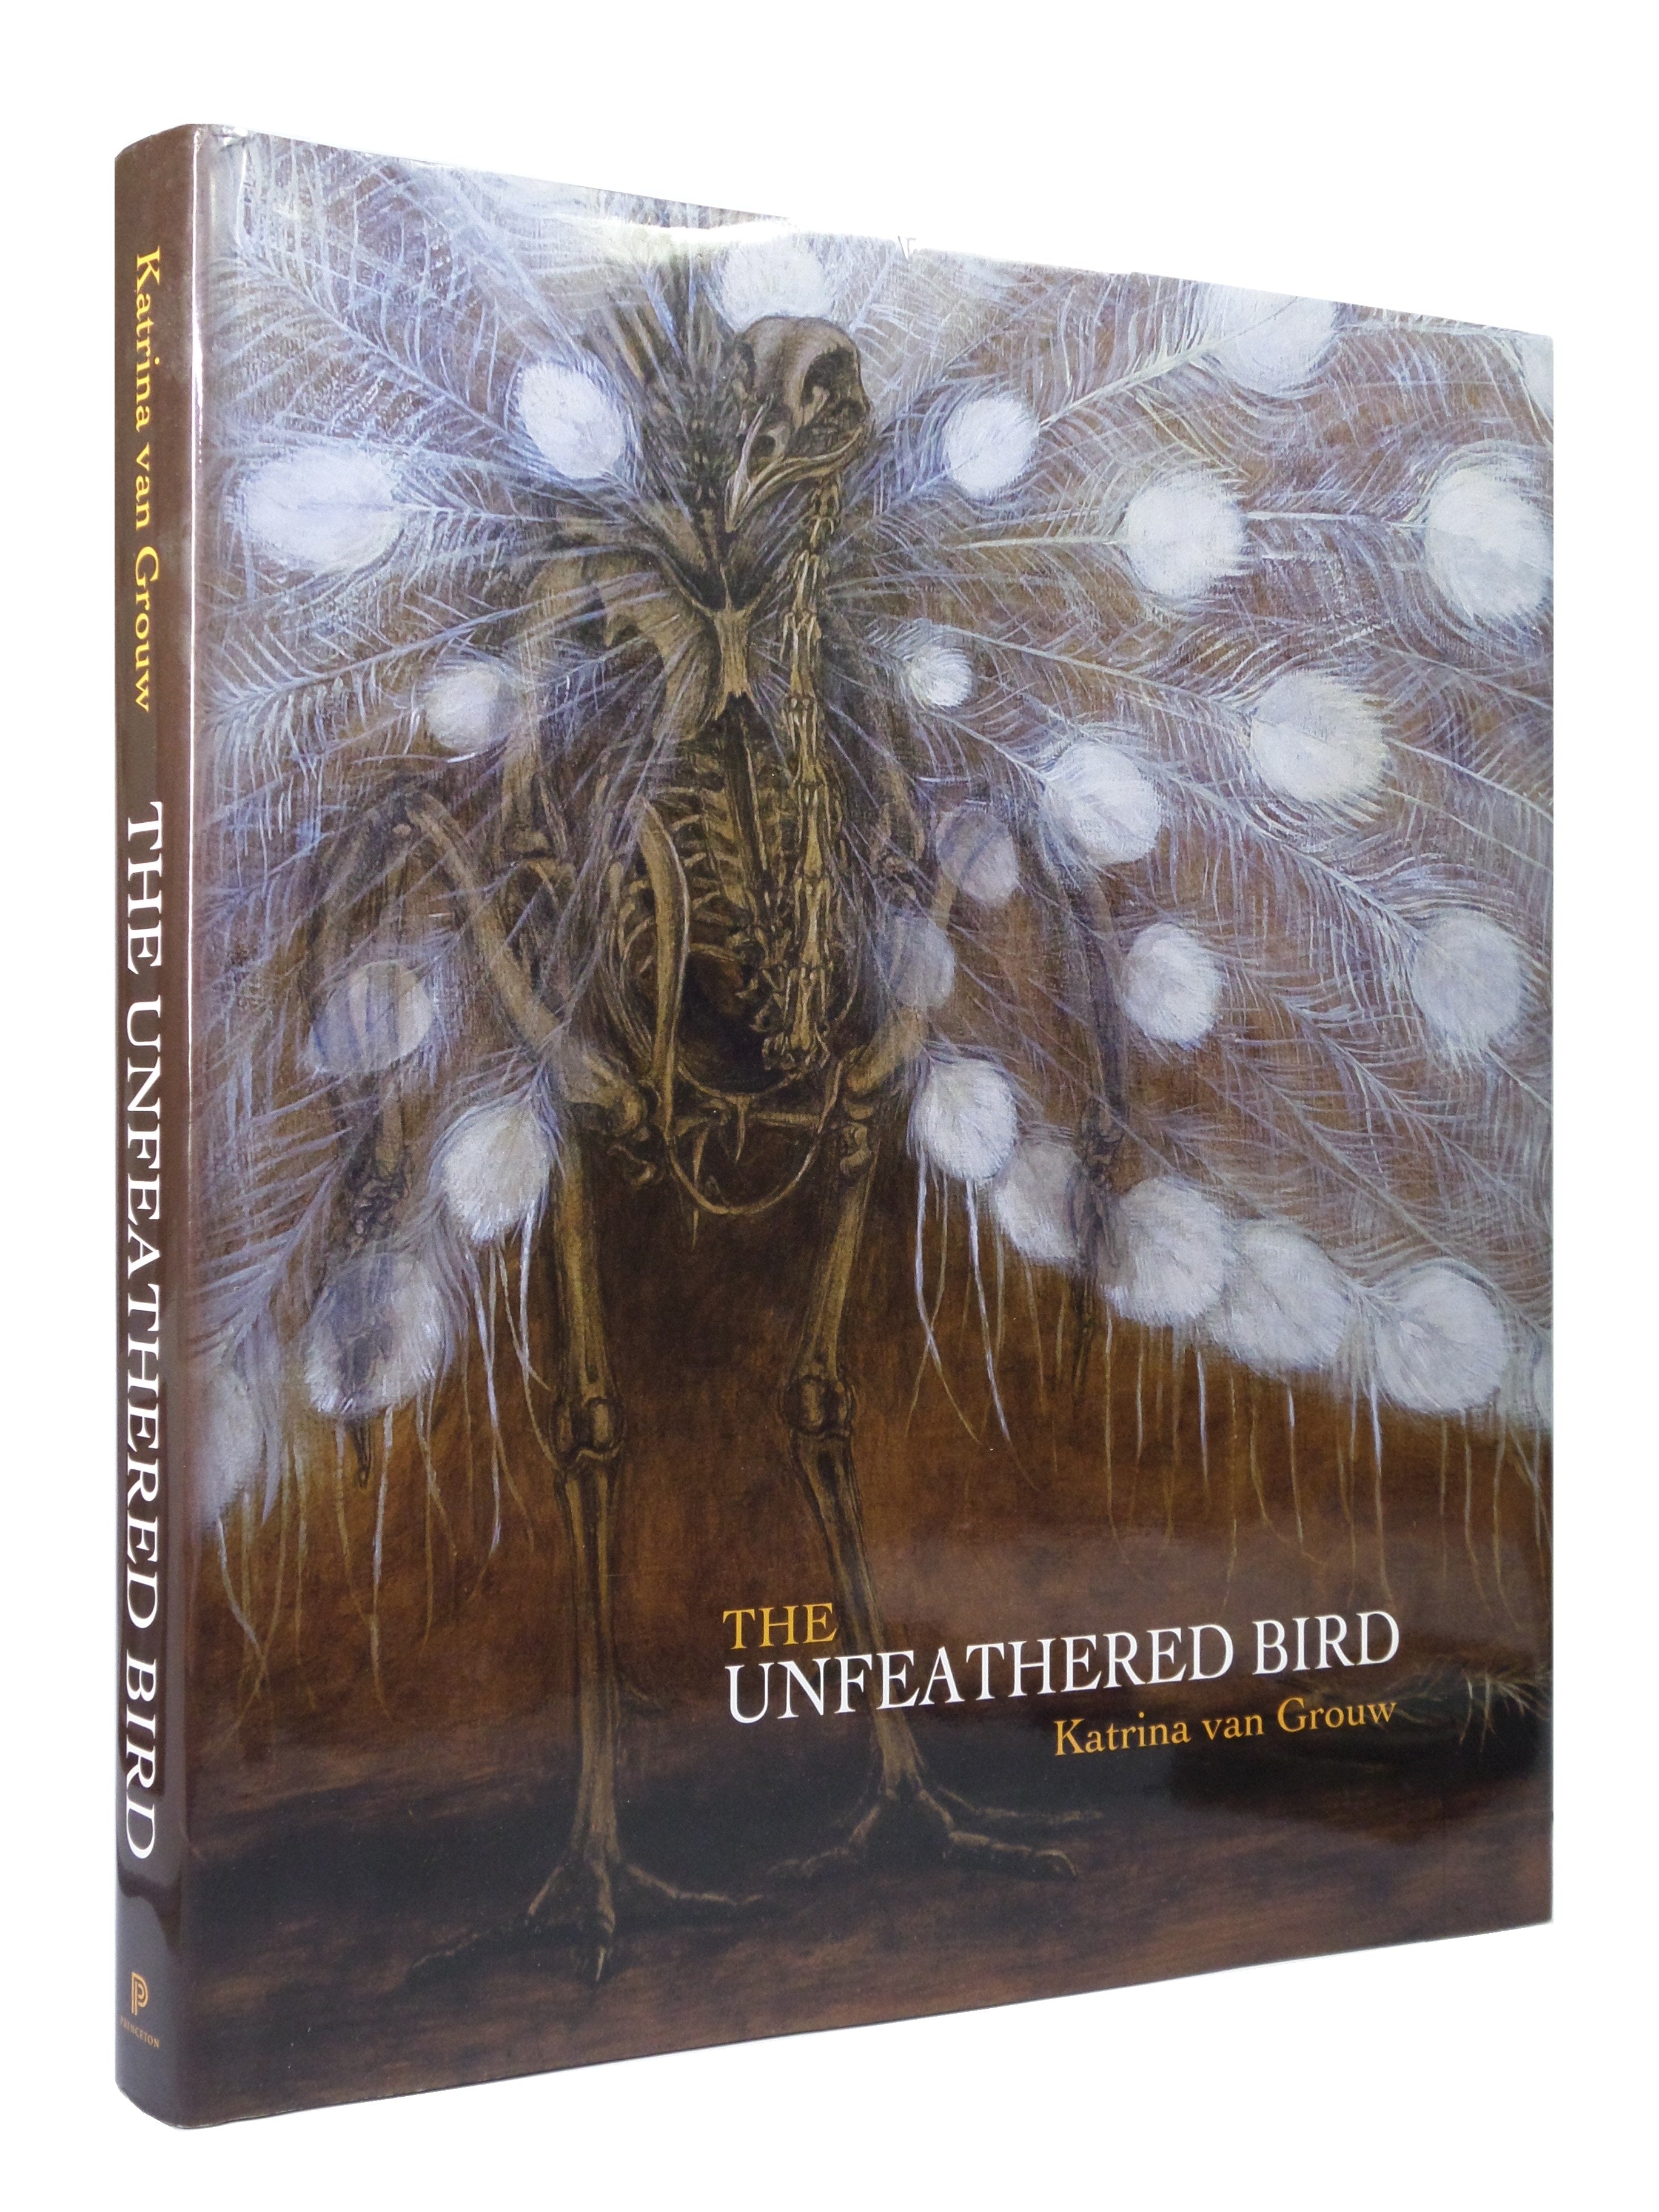 THE UNFEATHERED BIRD BY KATRINA VAN GROUW 2013 HARDCOVER